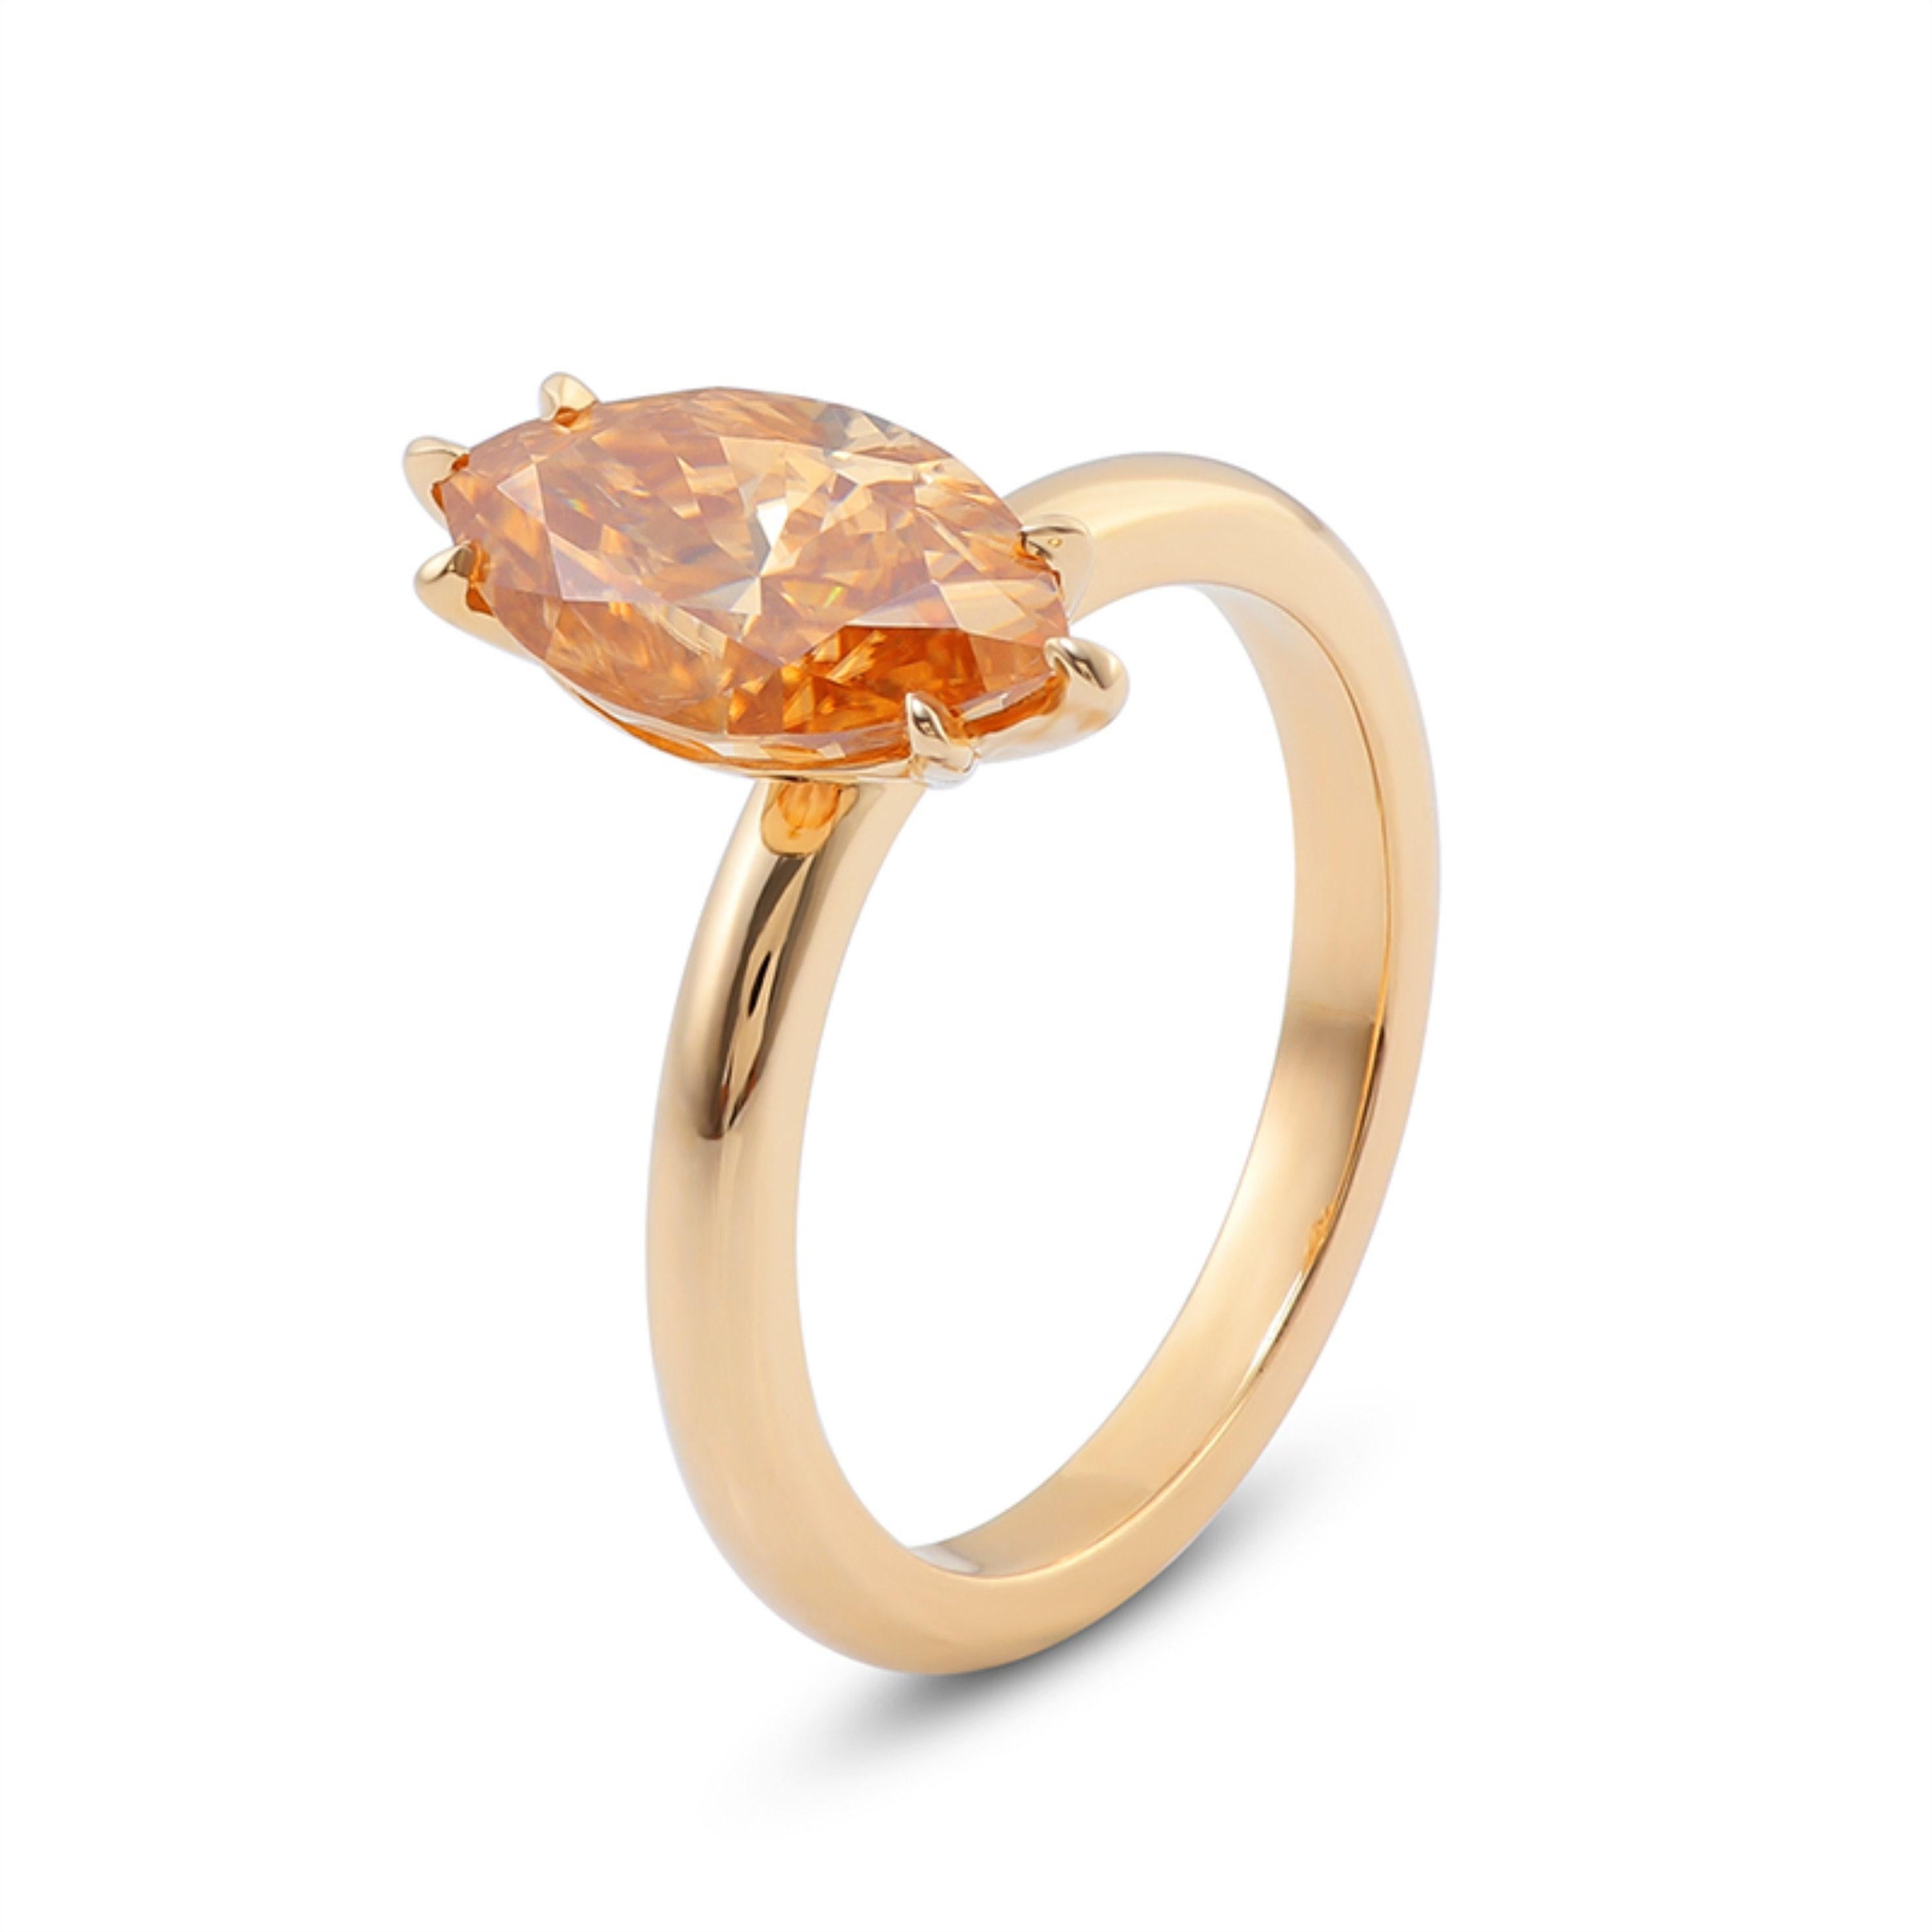 For Sale:  2 Carat Champagne Diamond Diamond Engagement Ring Bridal Wedding Ring 4